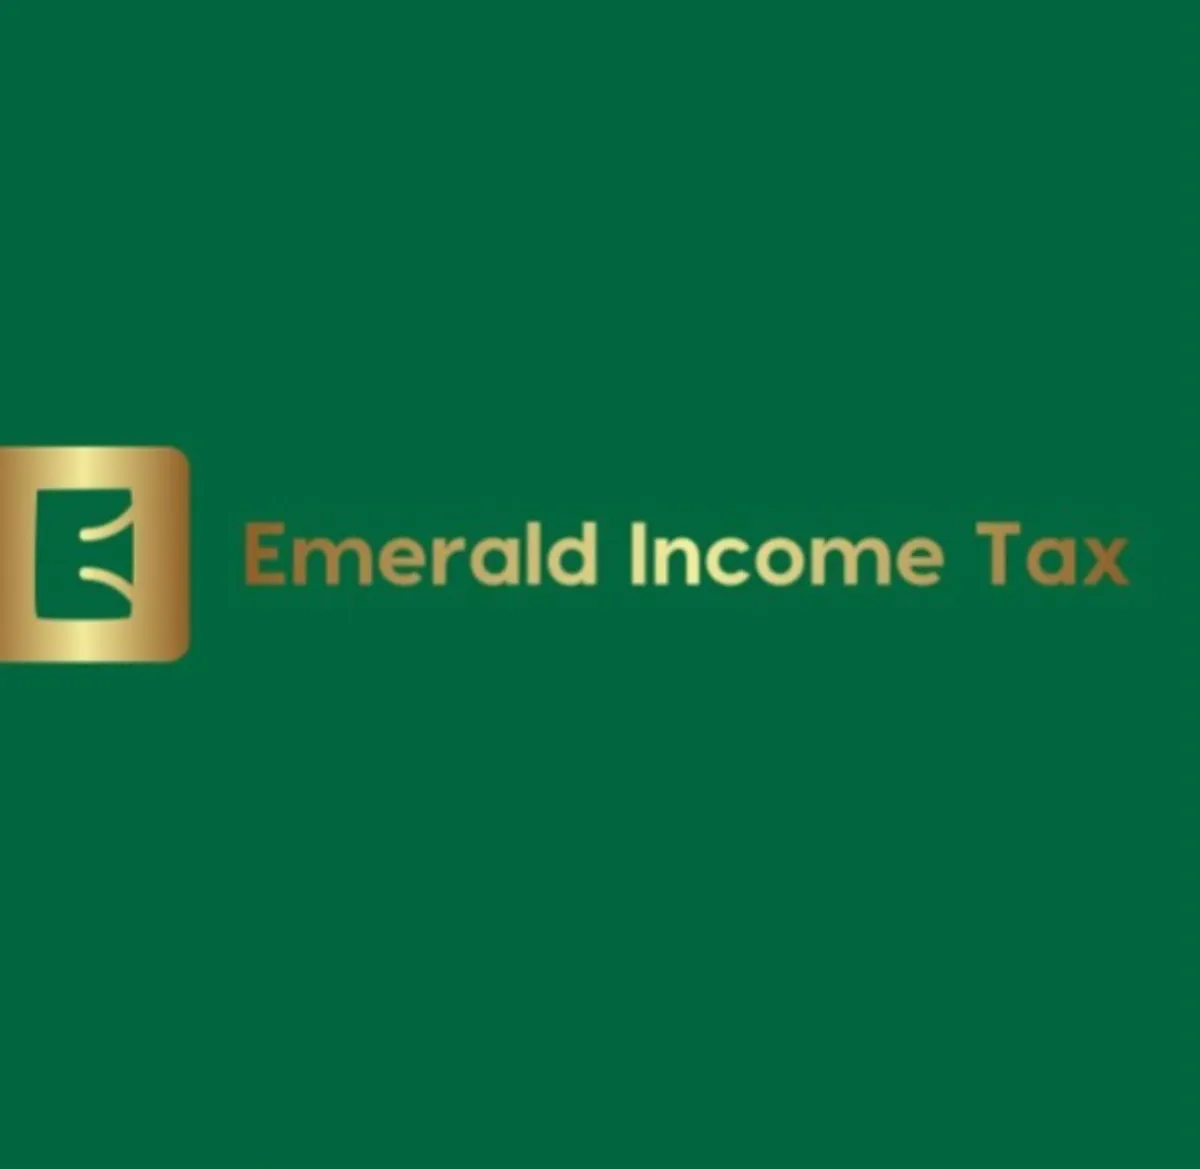 Income tax return service